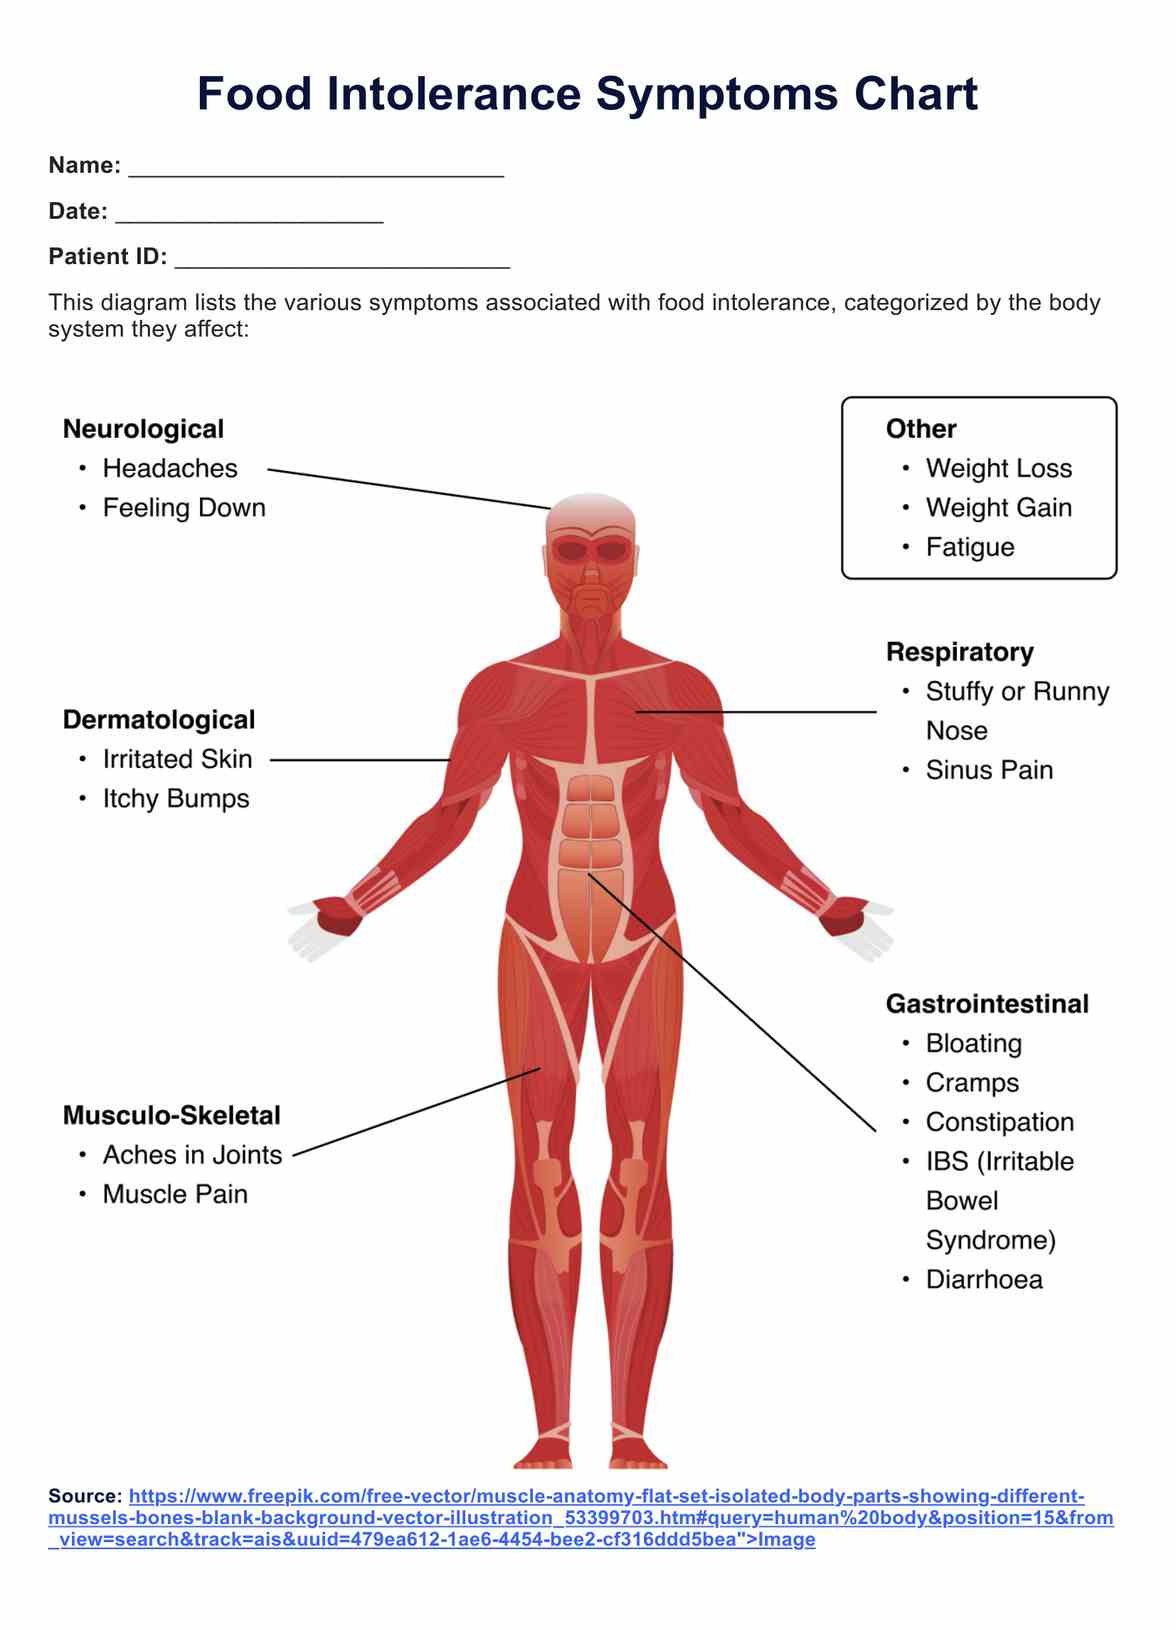 Food Intolerance Symptoms Chart PDF Example